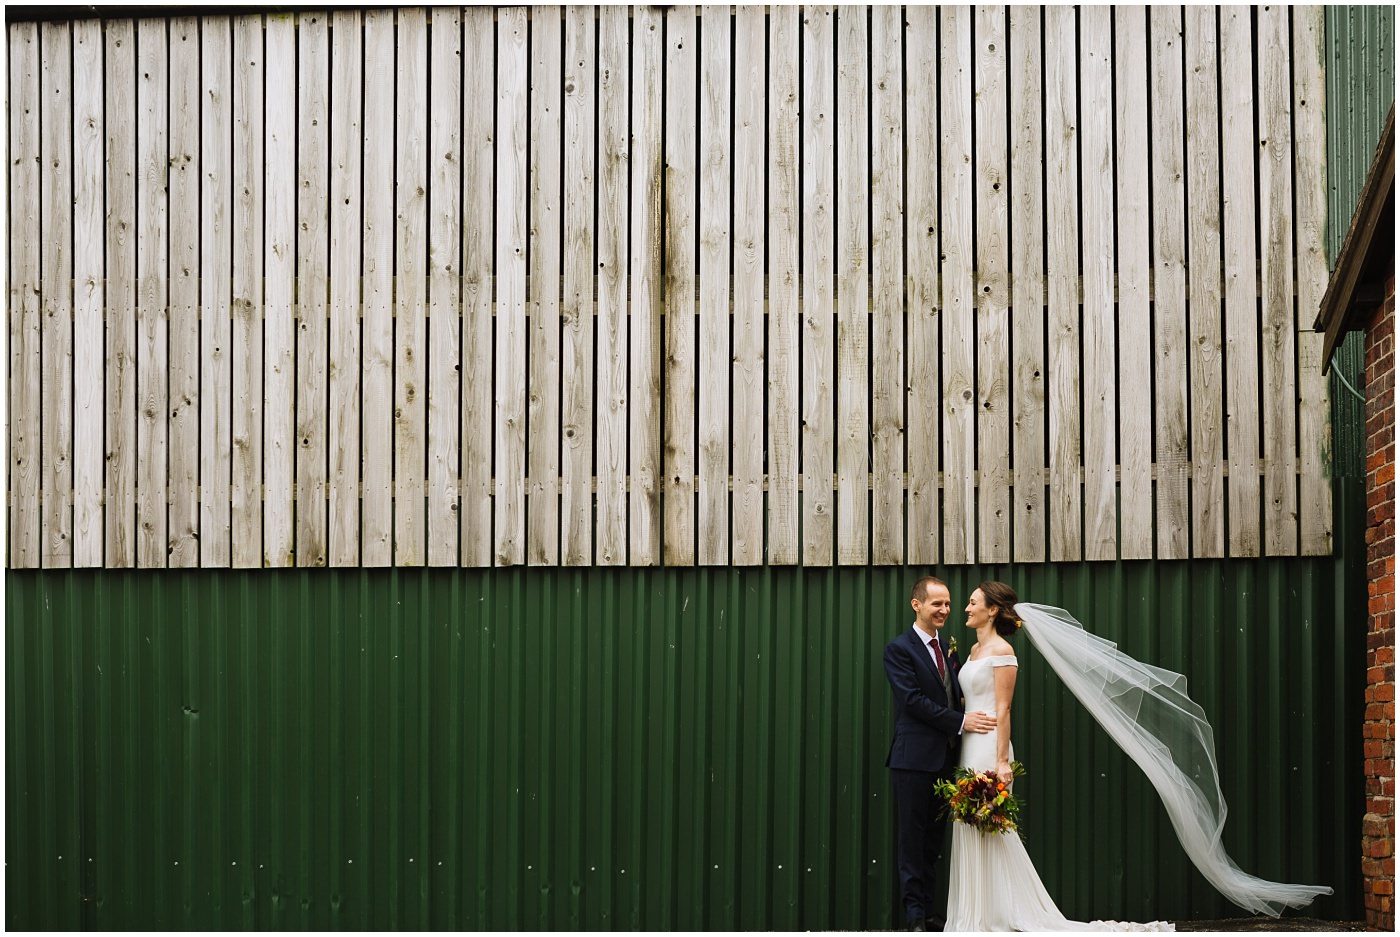 Cheshire wedding photography at Sandhole oak Barn